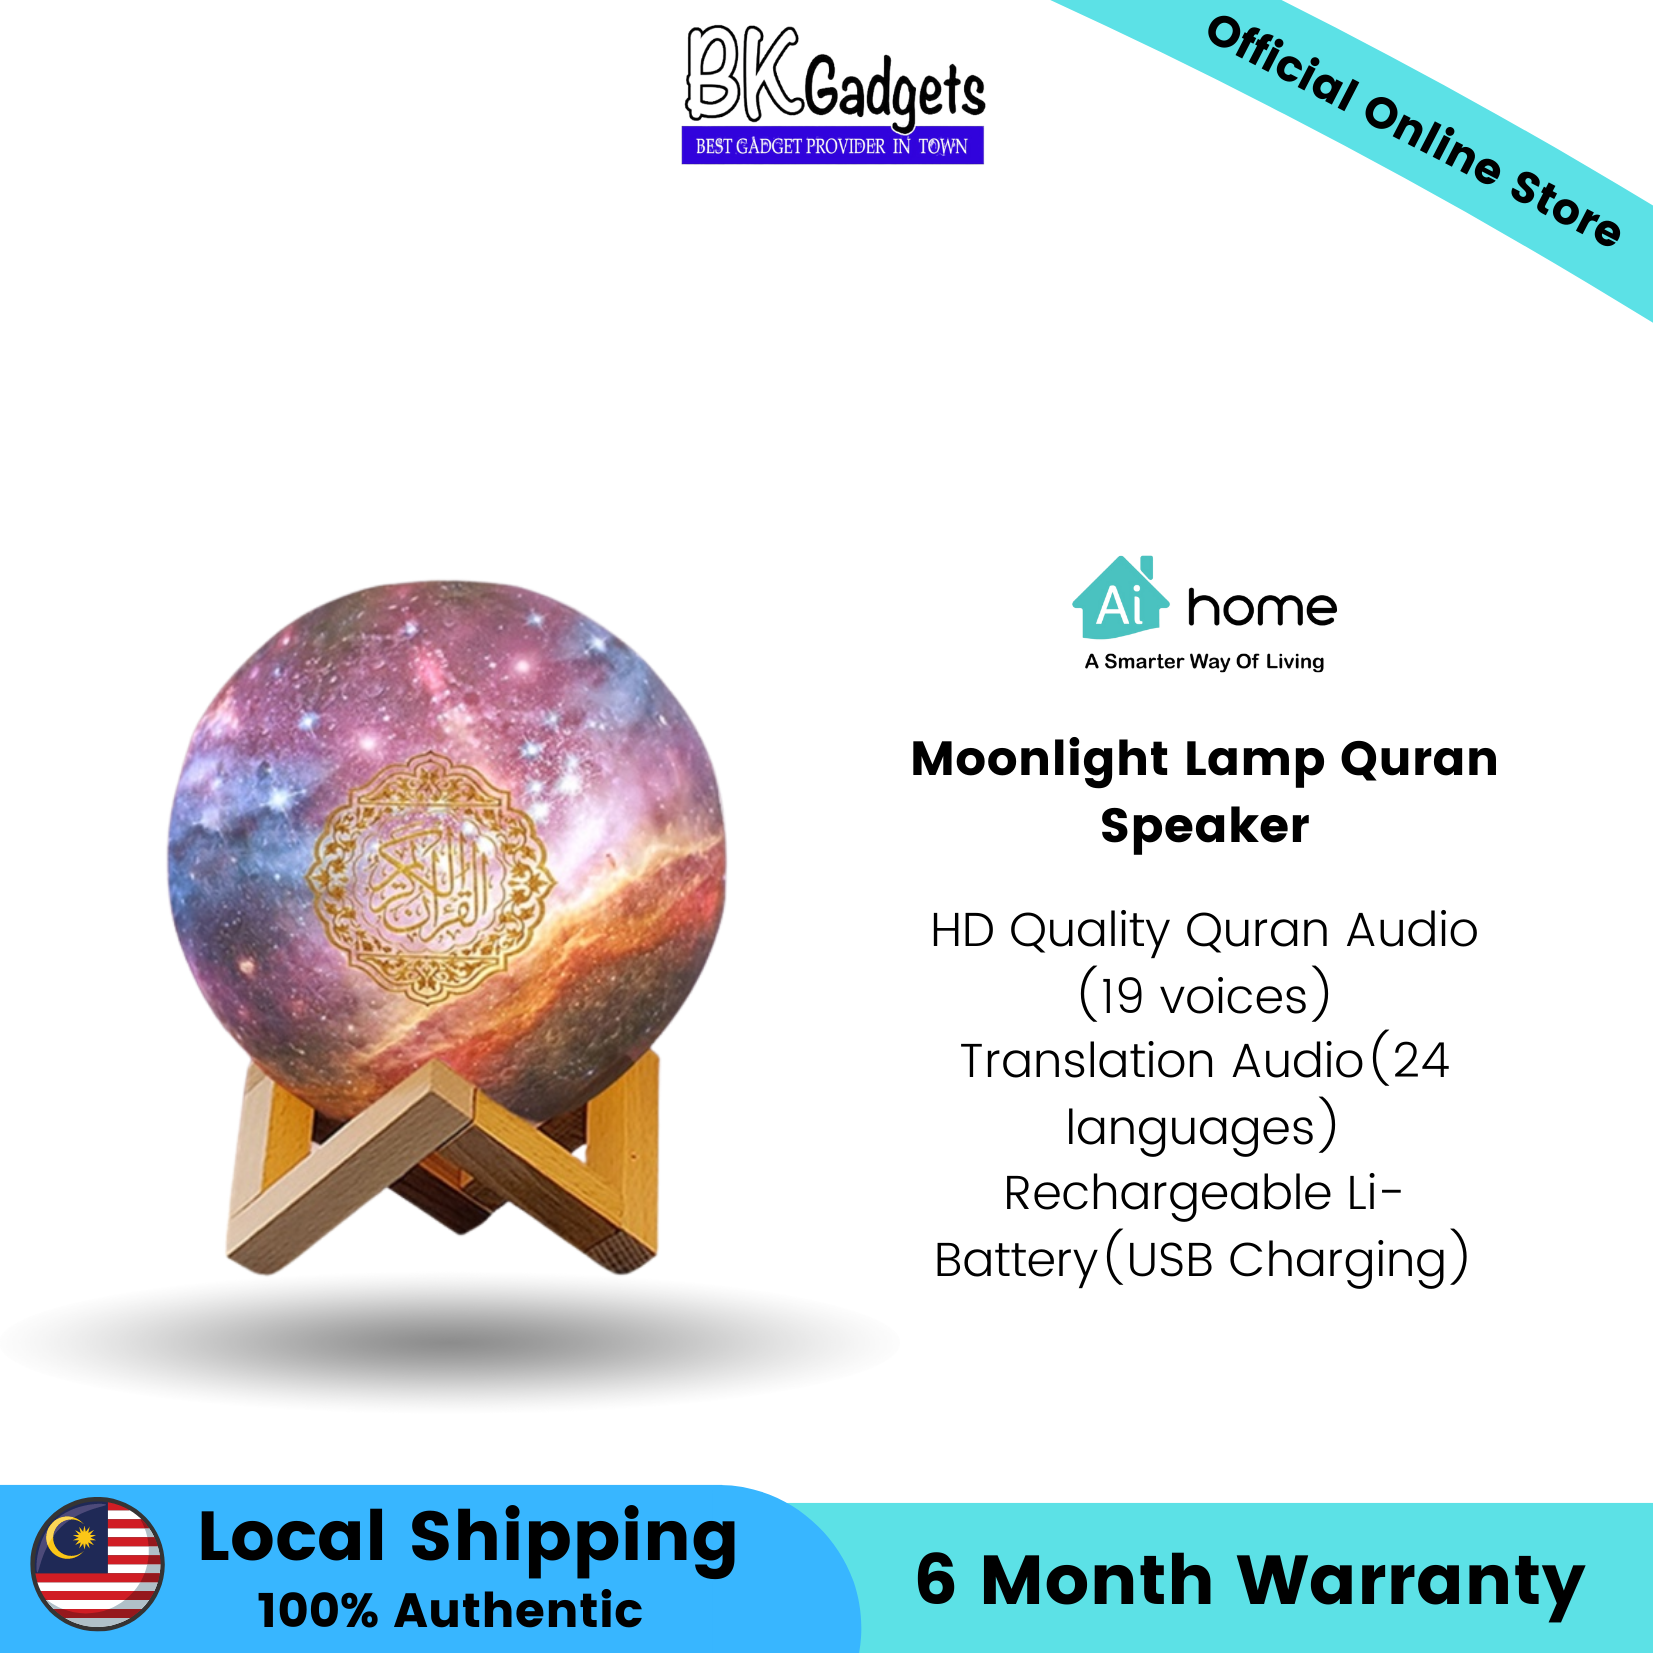 Moonlight Lamp Quran Speaker - HD Quality Quran Audio Translation Audio Rechargeable Li-Battery (USB Charging)